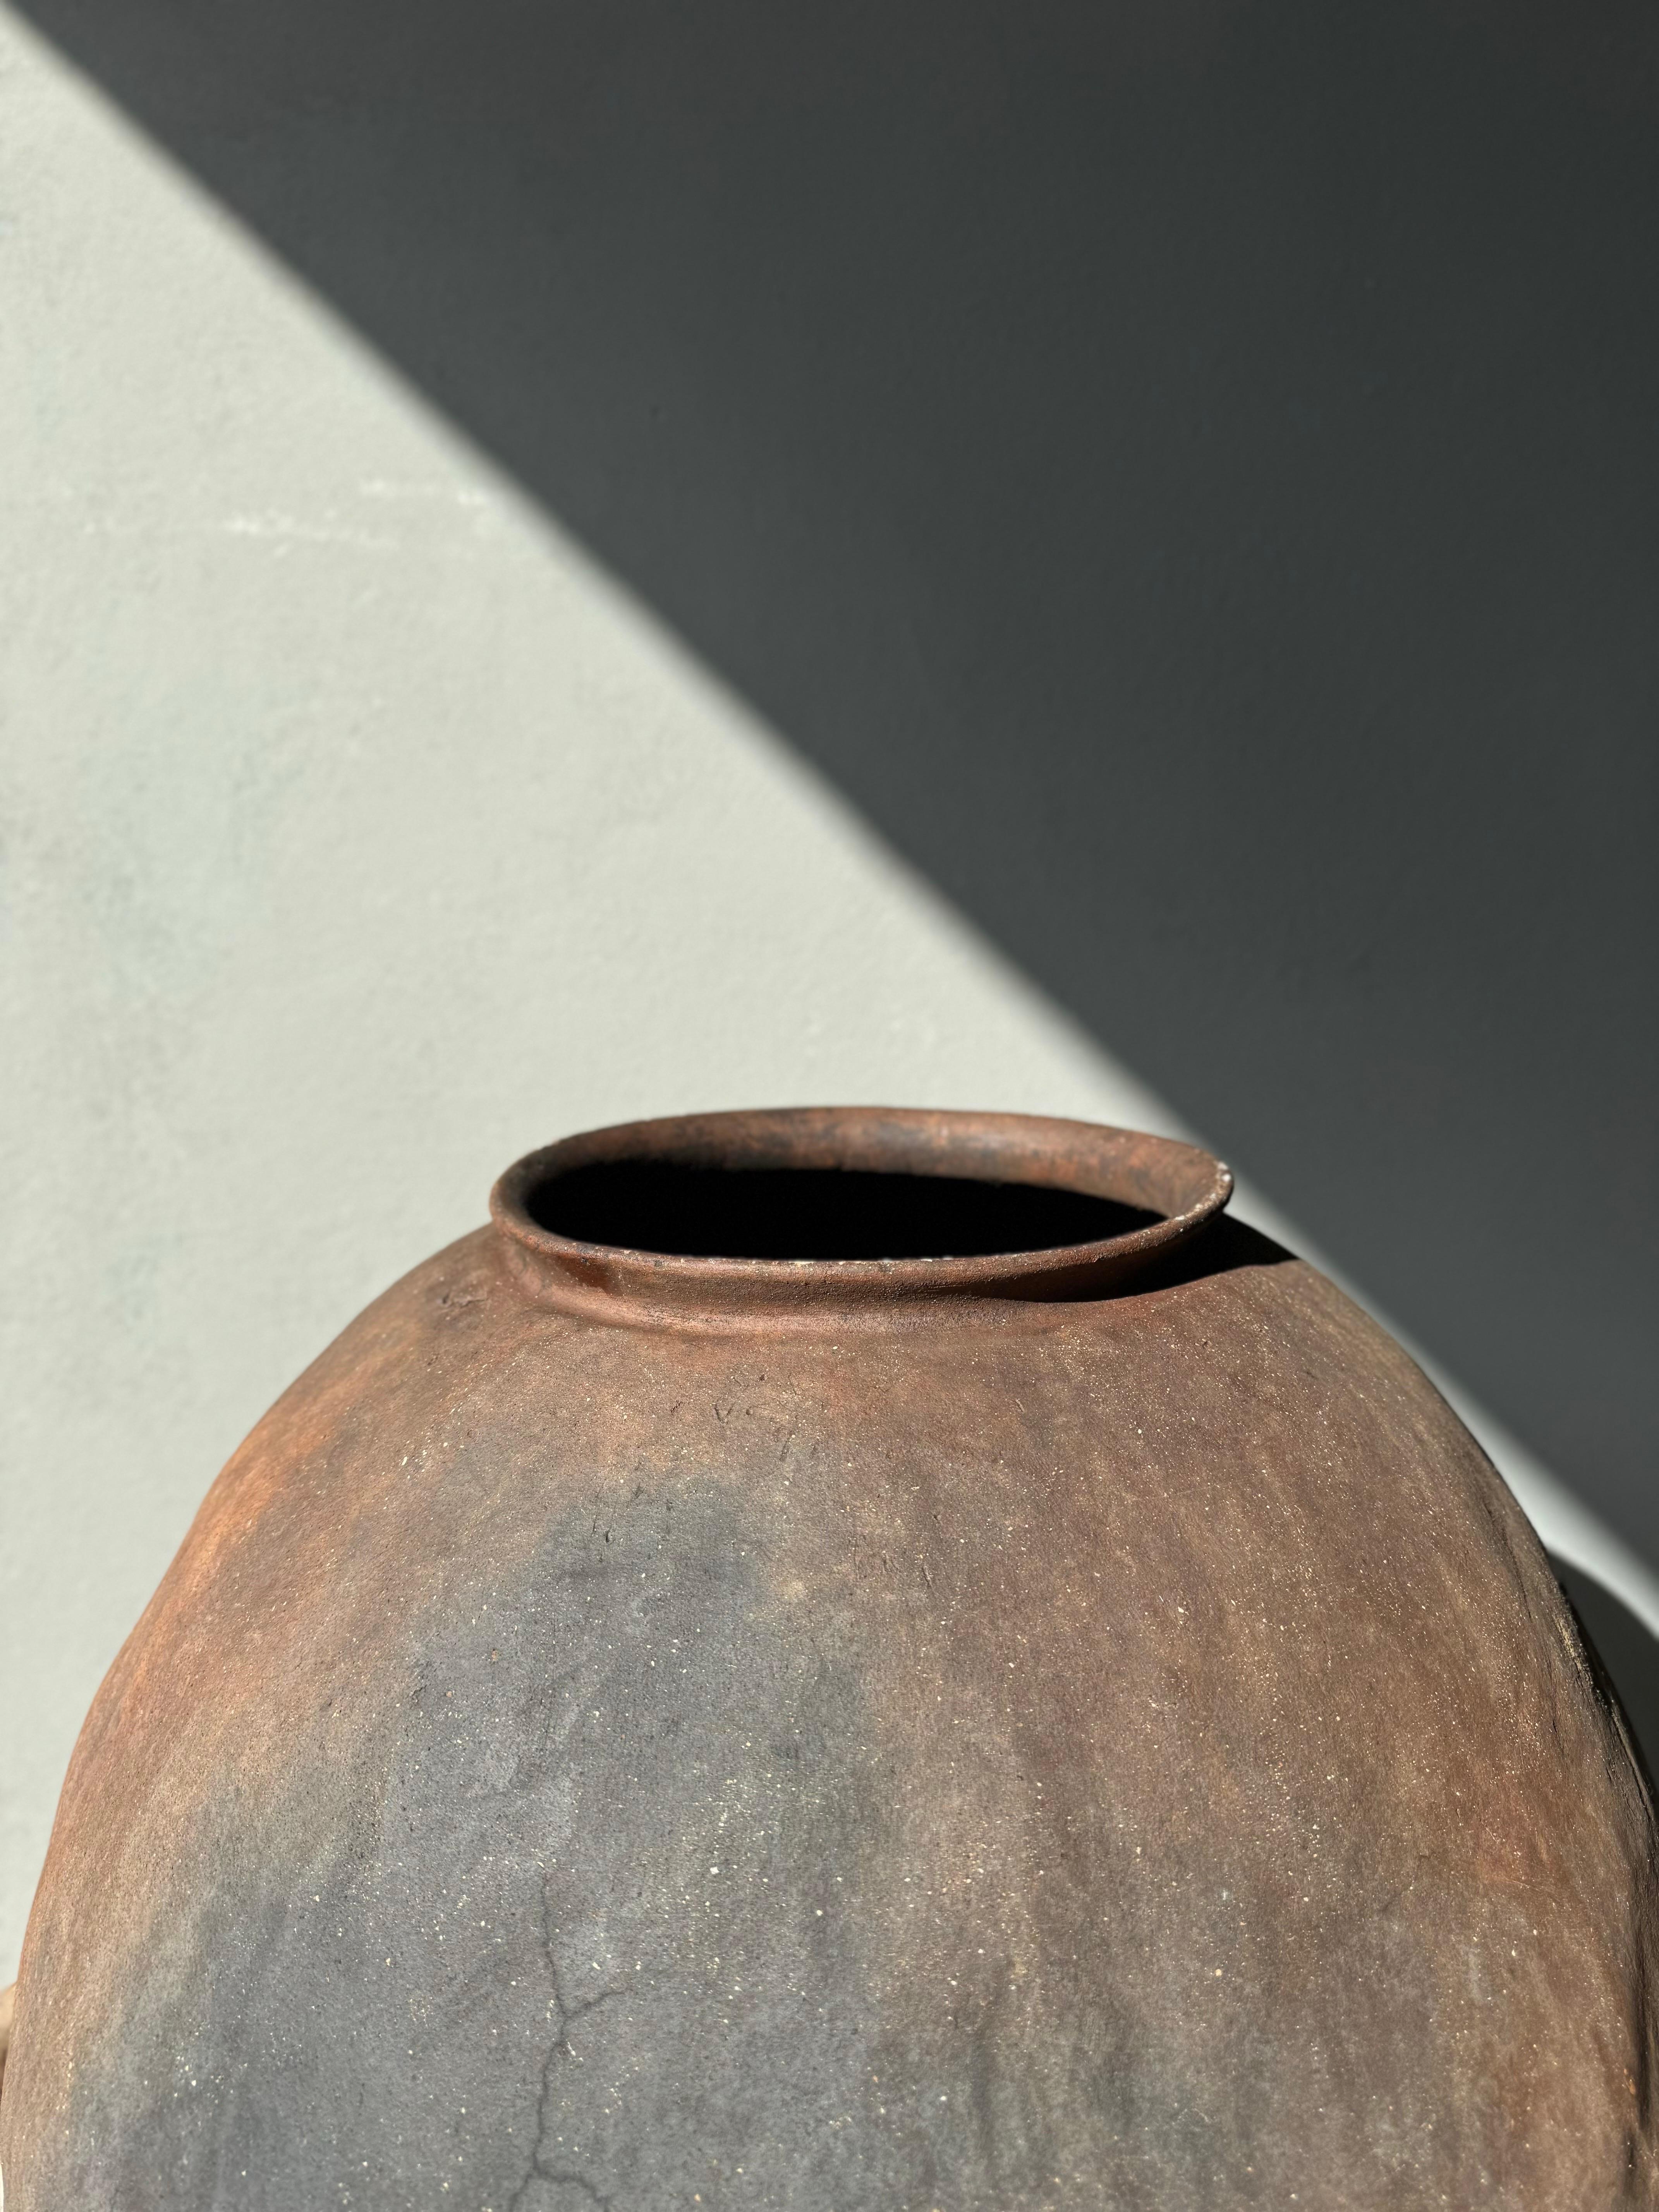 Terracotta Water Jar From Northern Puebla, Mexico, Circa 1920´s In Good Condition For Sale In San Miguel de Allende, Guanajuato